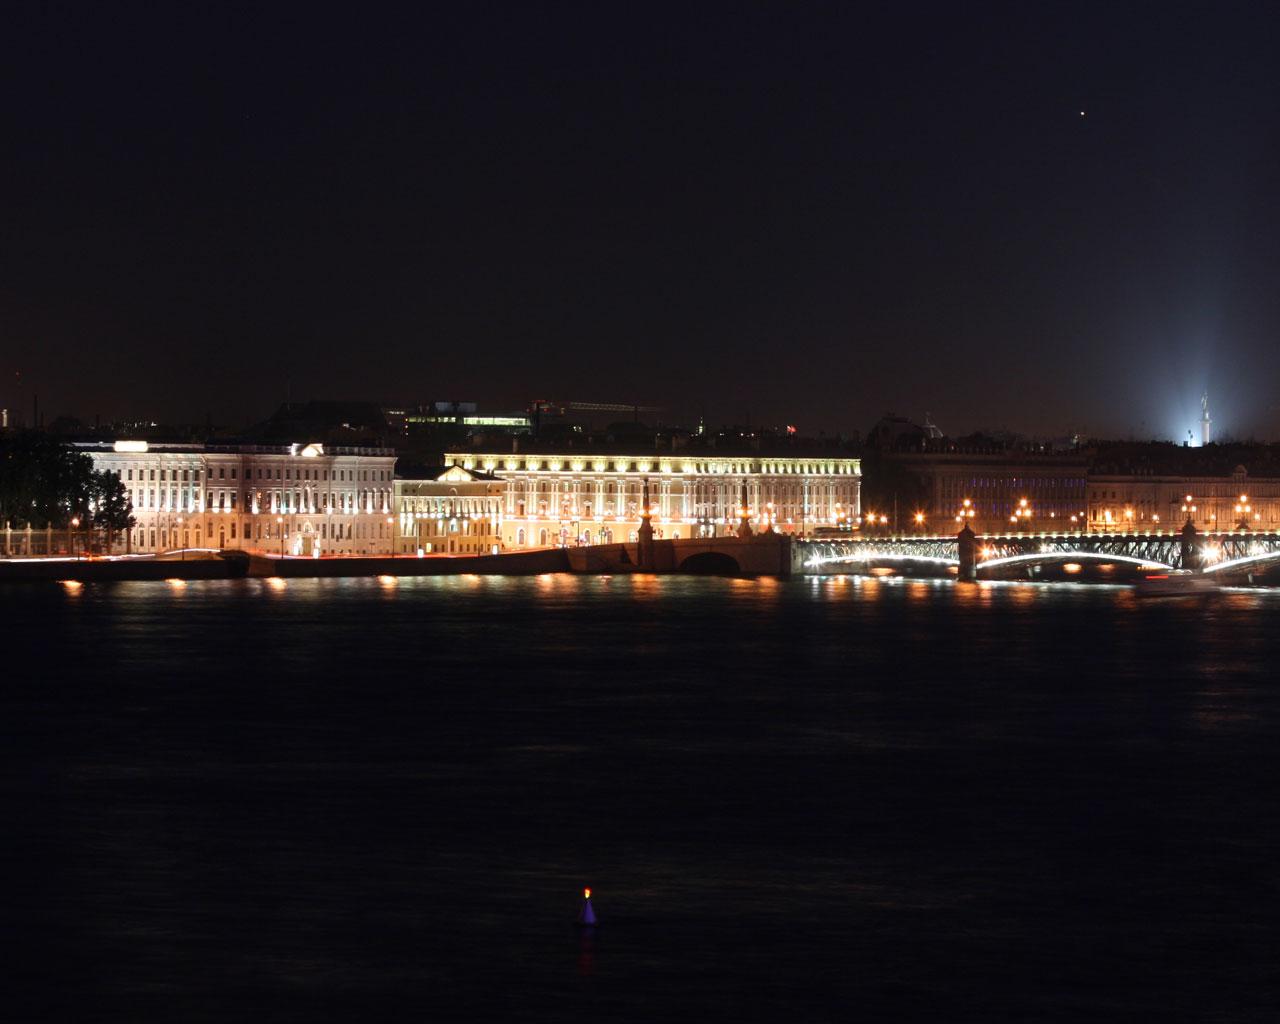 St Petersburg - At night Wallpaper #2 1280 x 1024 